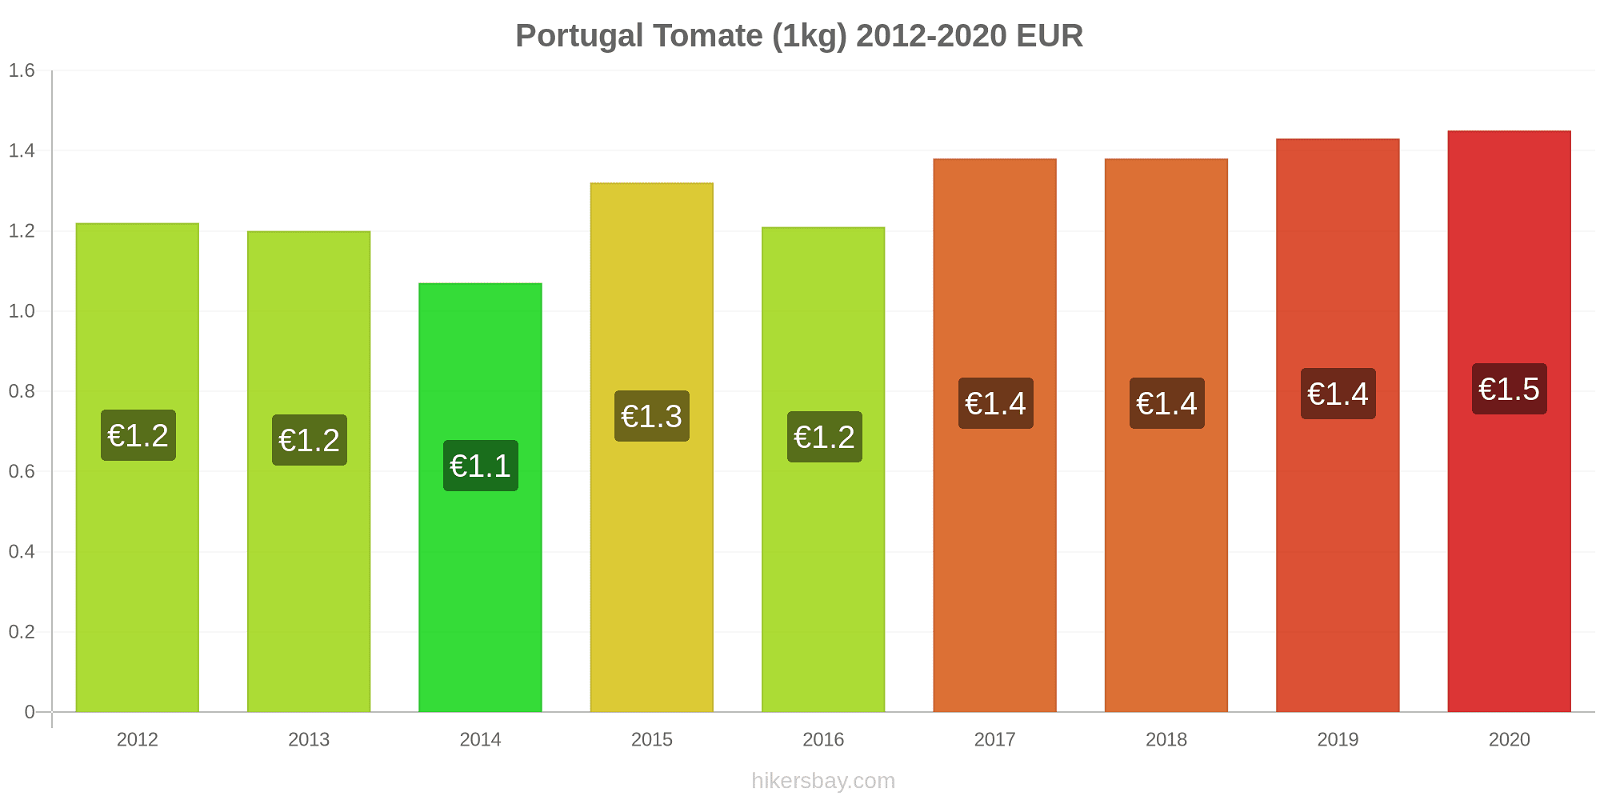 Portugal changements de prix Tomate (1kg) hikersbay.com